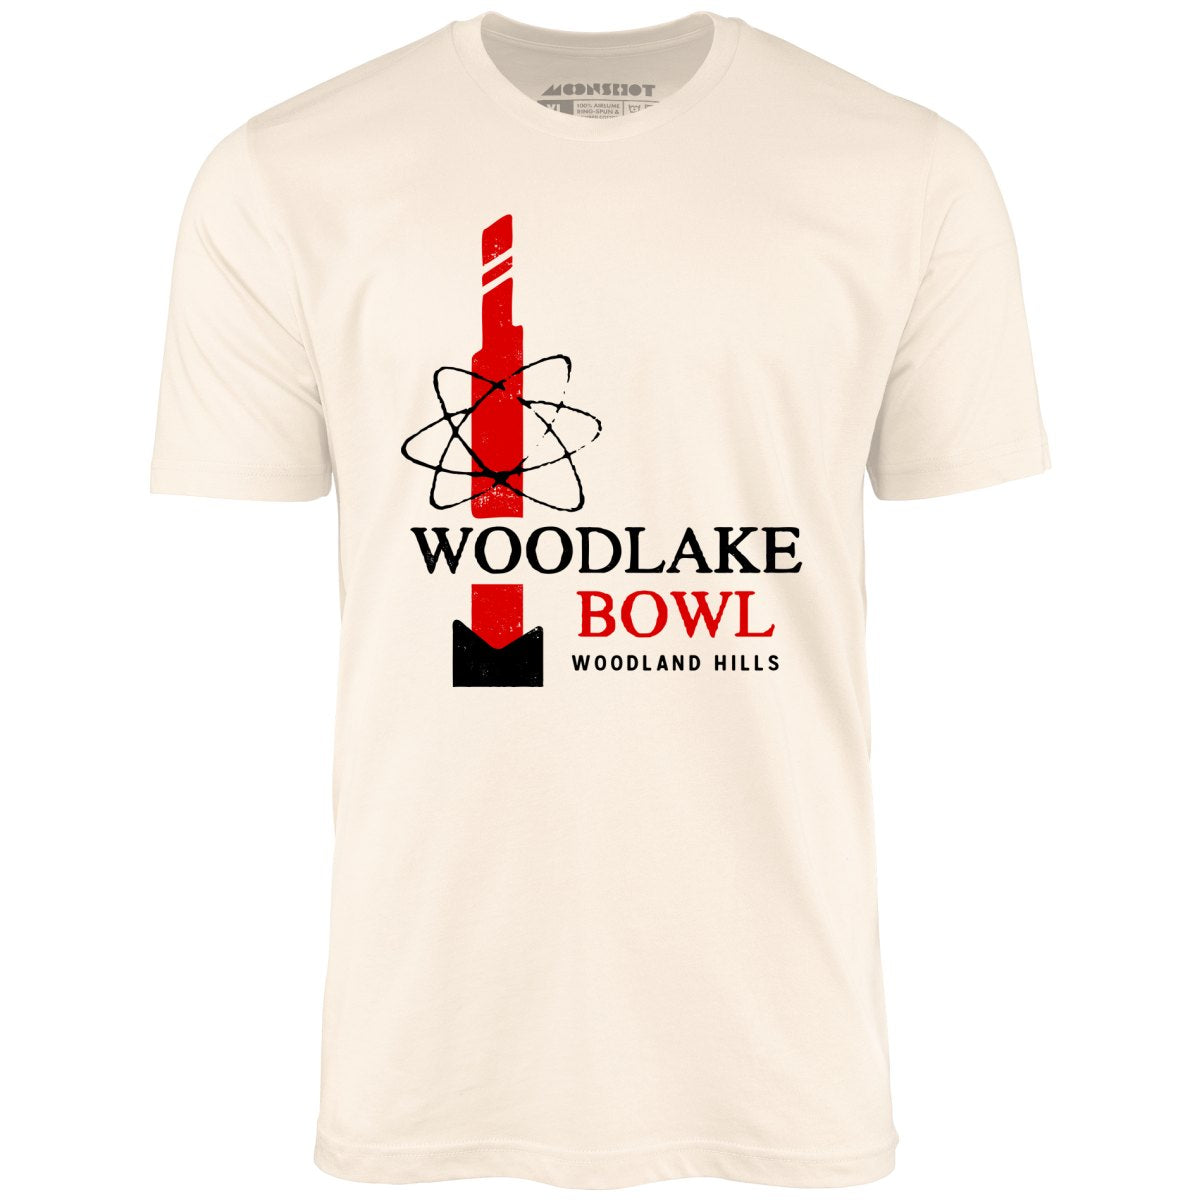 Woodlake Bowl - Woodland Hills, CA - Vintage Bowling Alley - Unisex T-Shirt